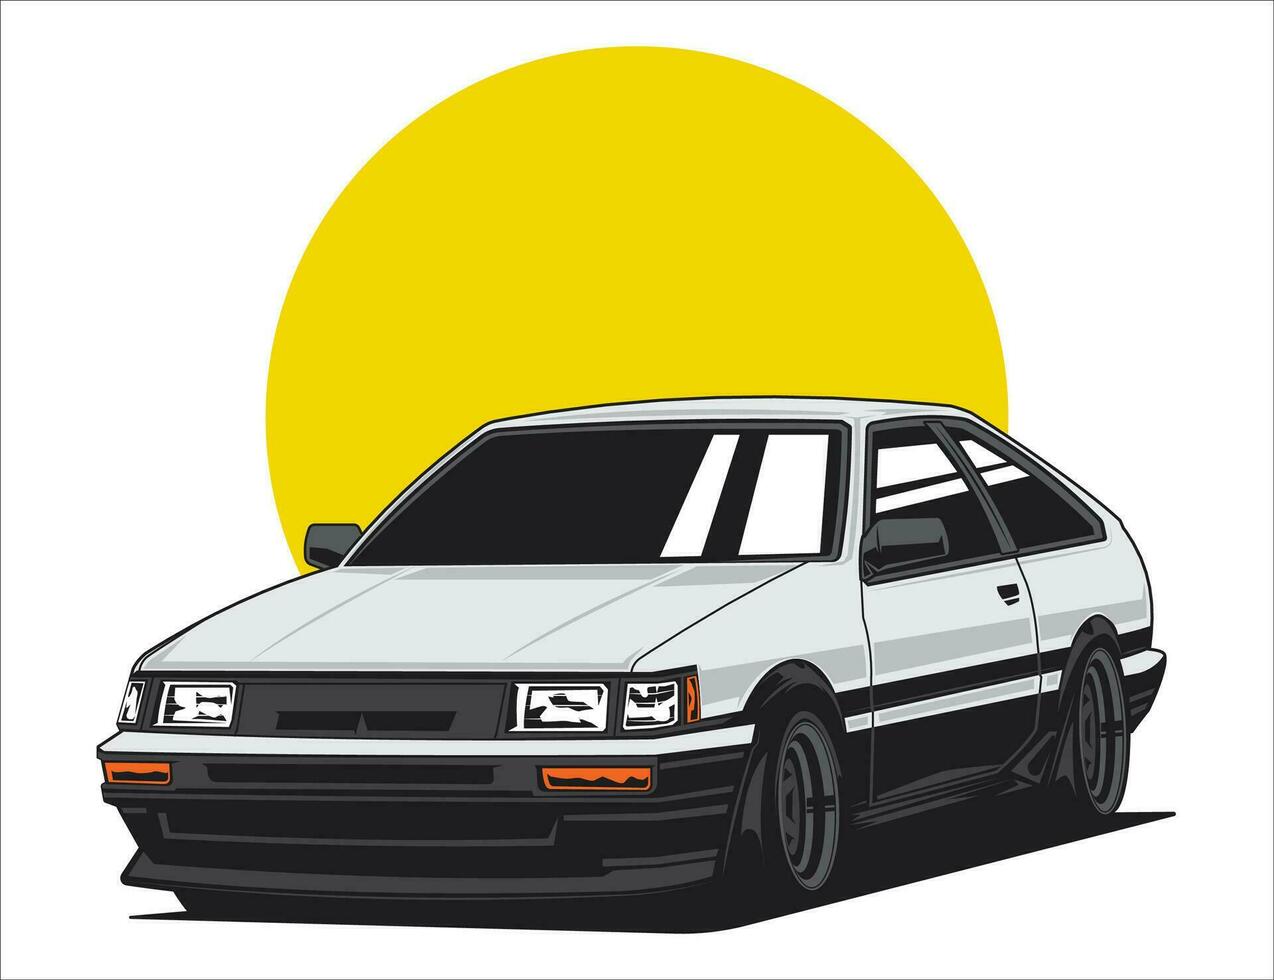 urban 90s vehicle car design vector idea graphic illustration